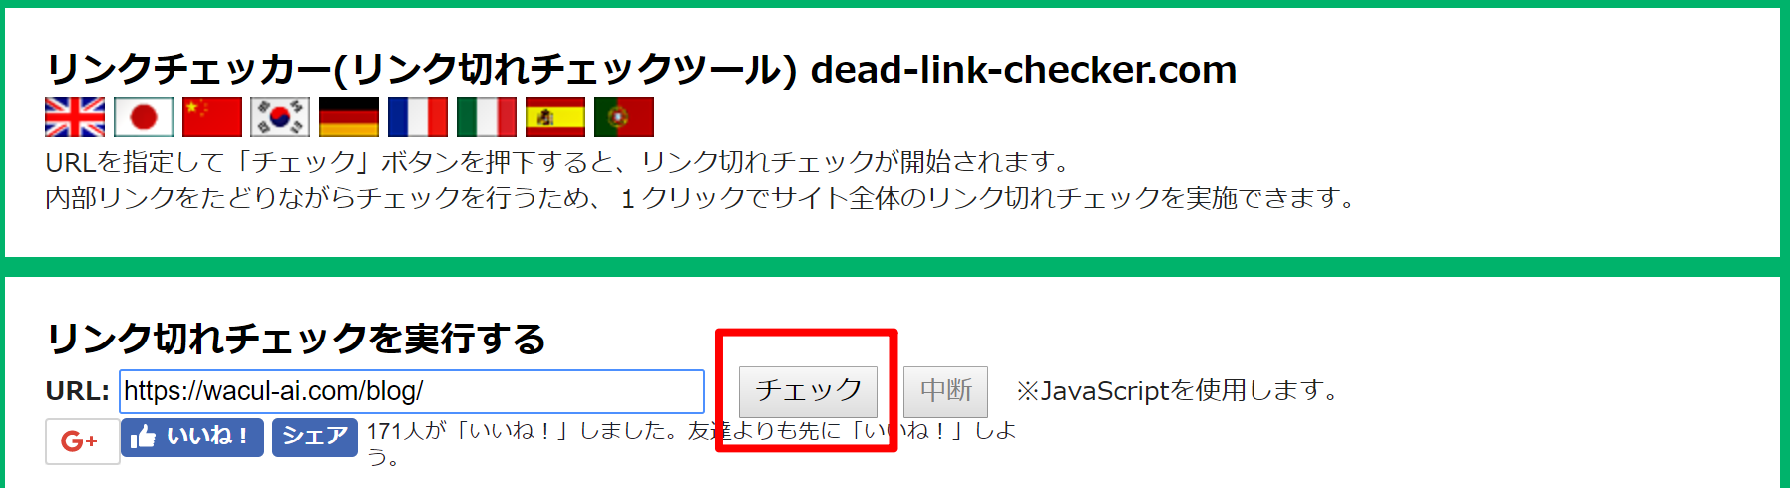 dead-link-checker.com画像URL入力画面